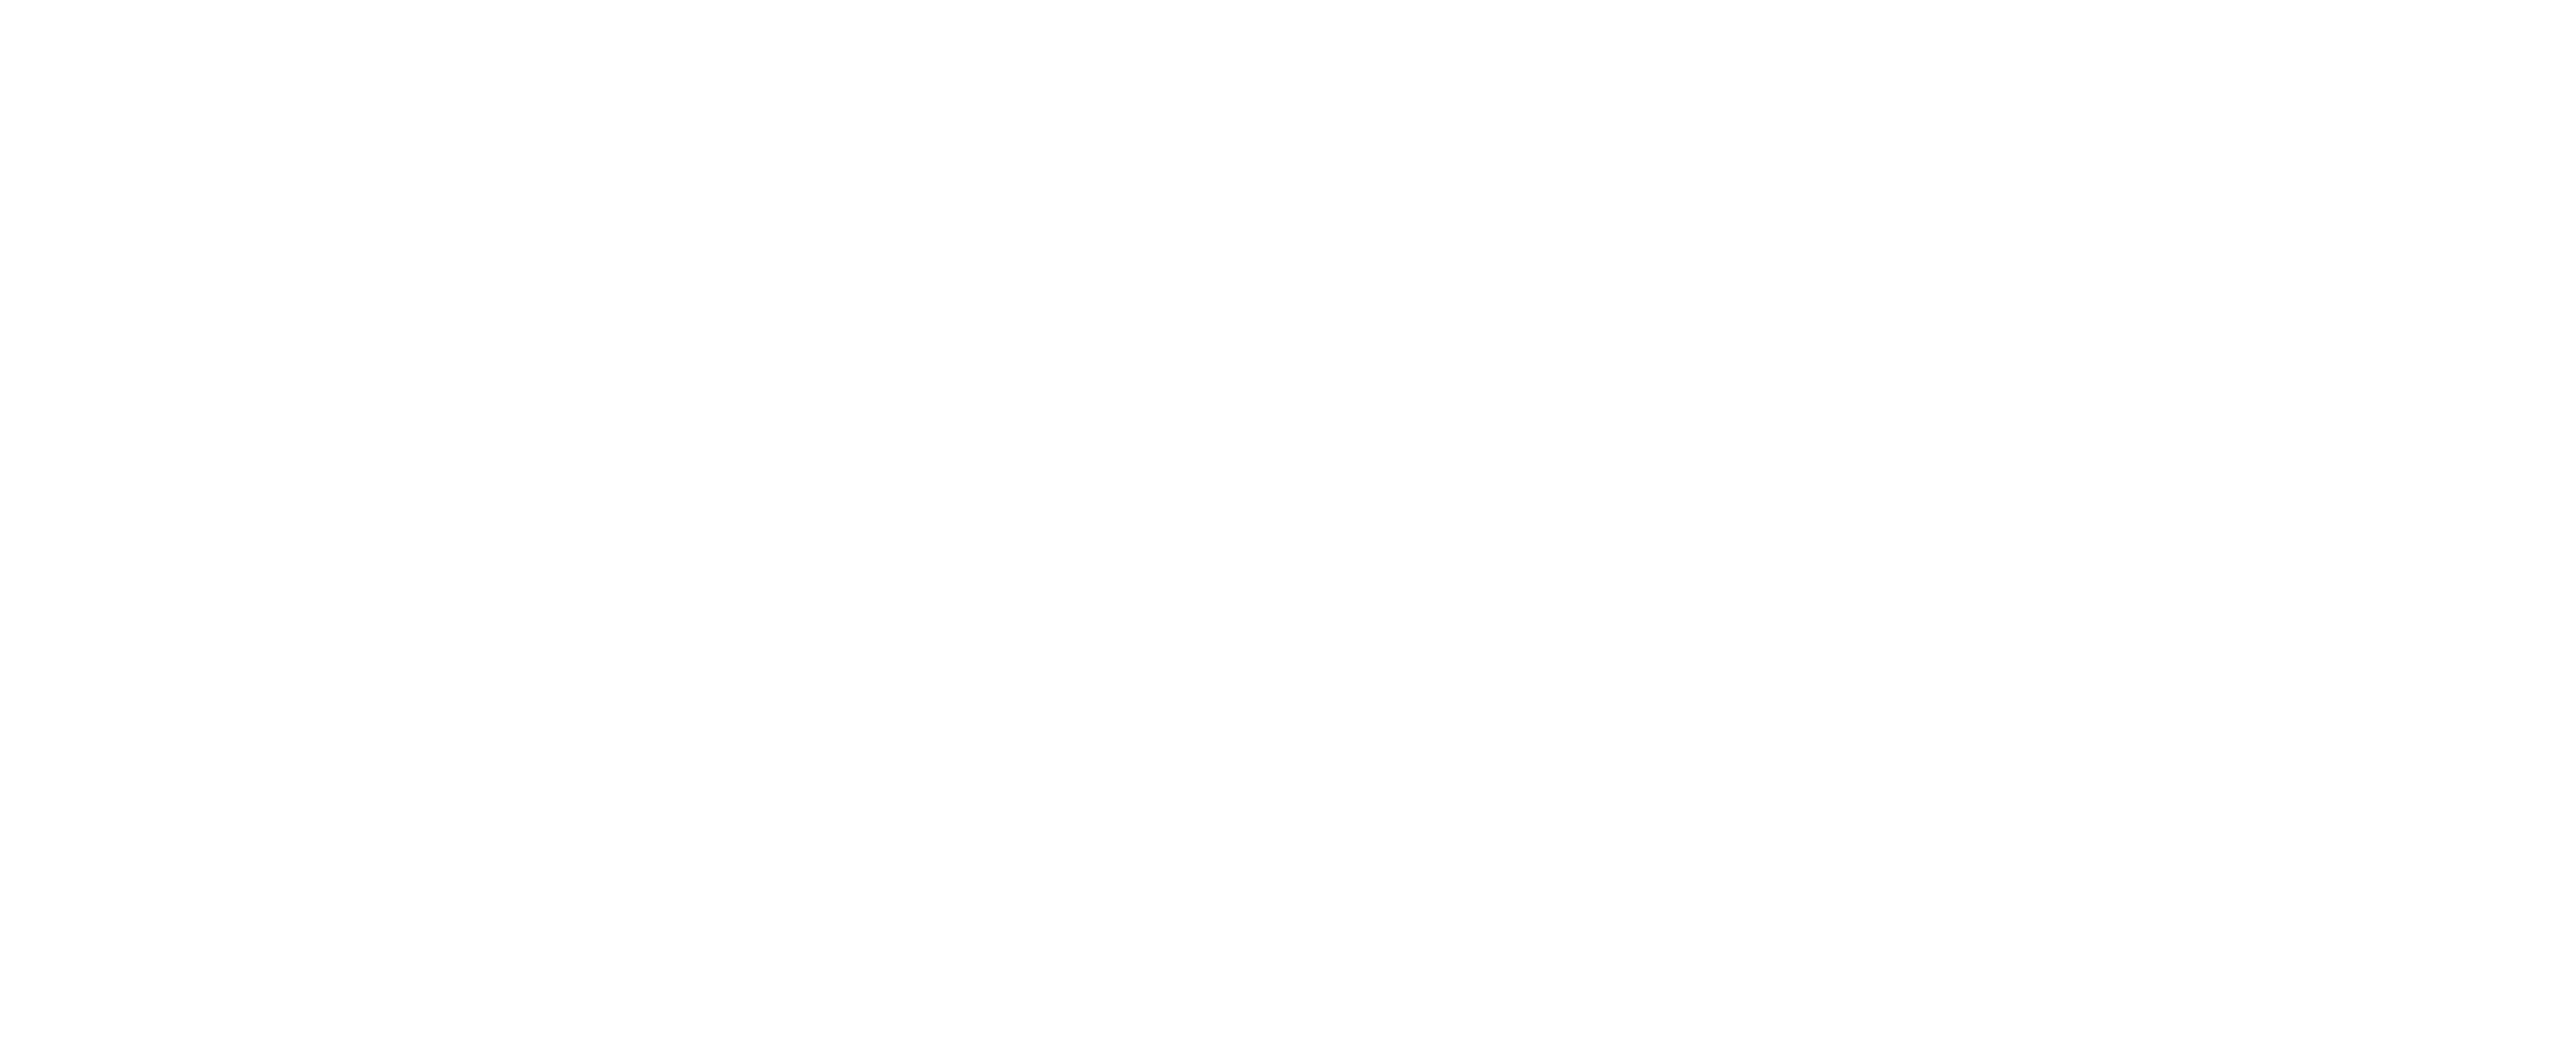 Fast Despatch Logistics